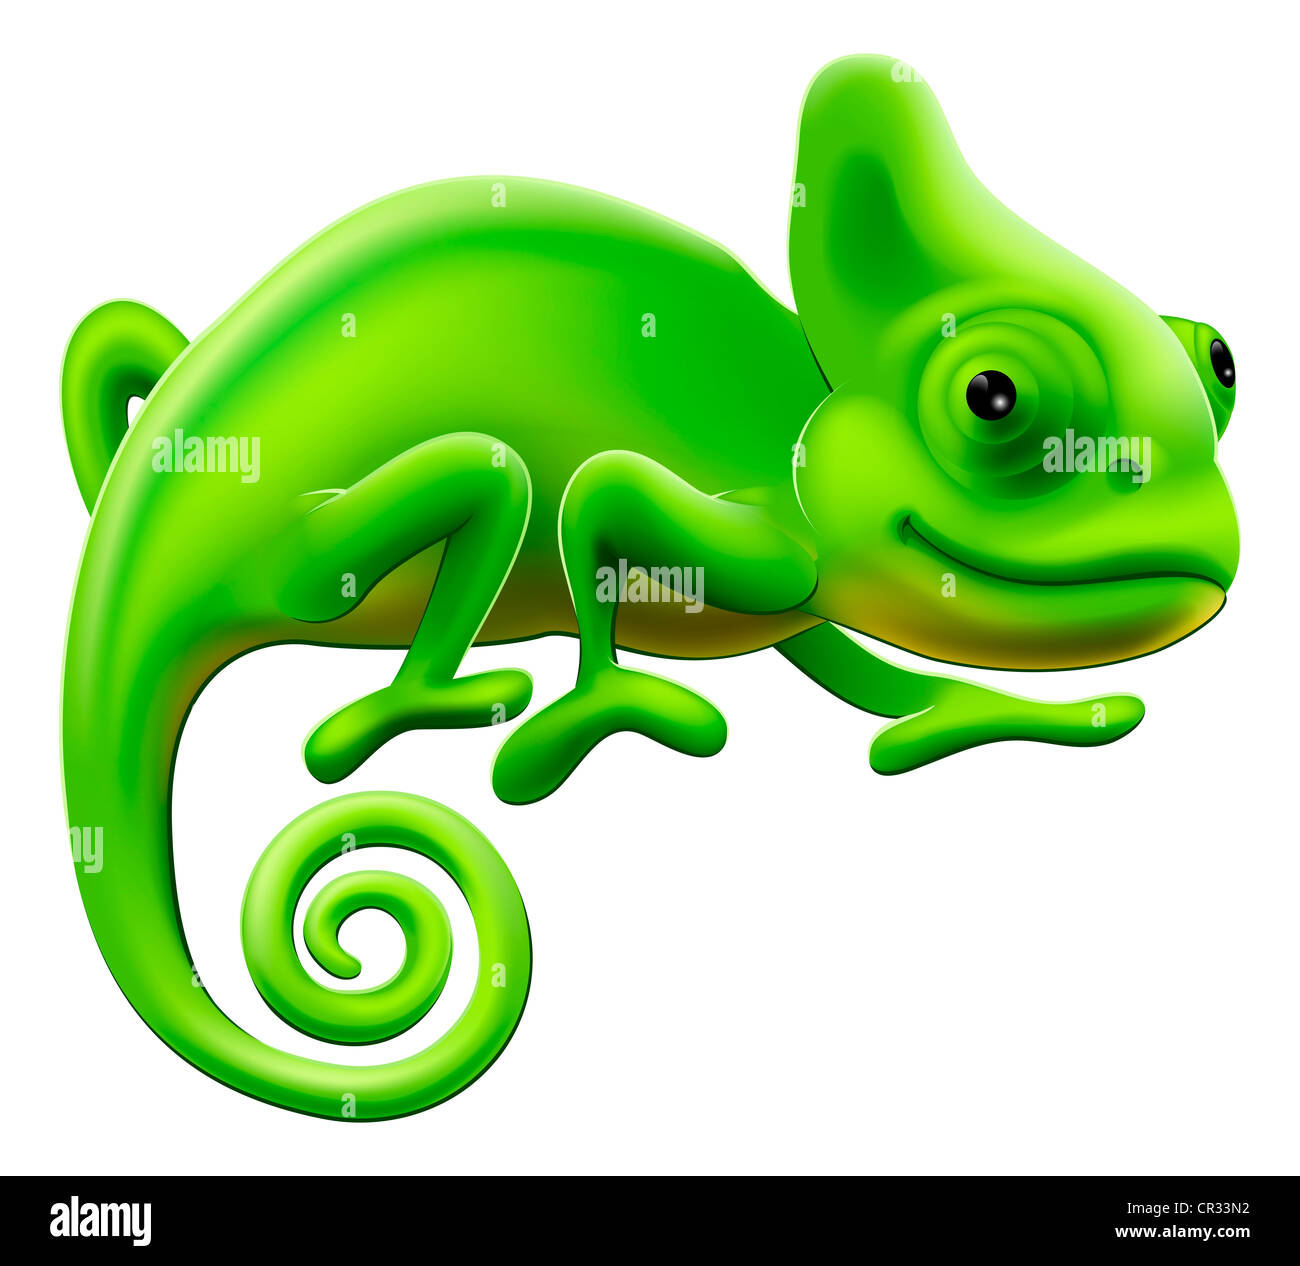 An illustration of a cute green cartoon chameleon lizard Stock Photo - Alamy